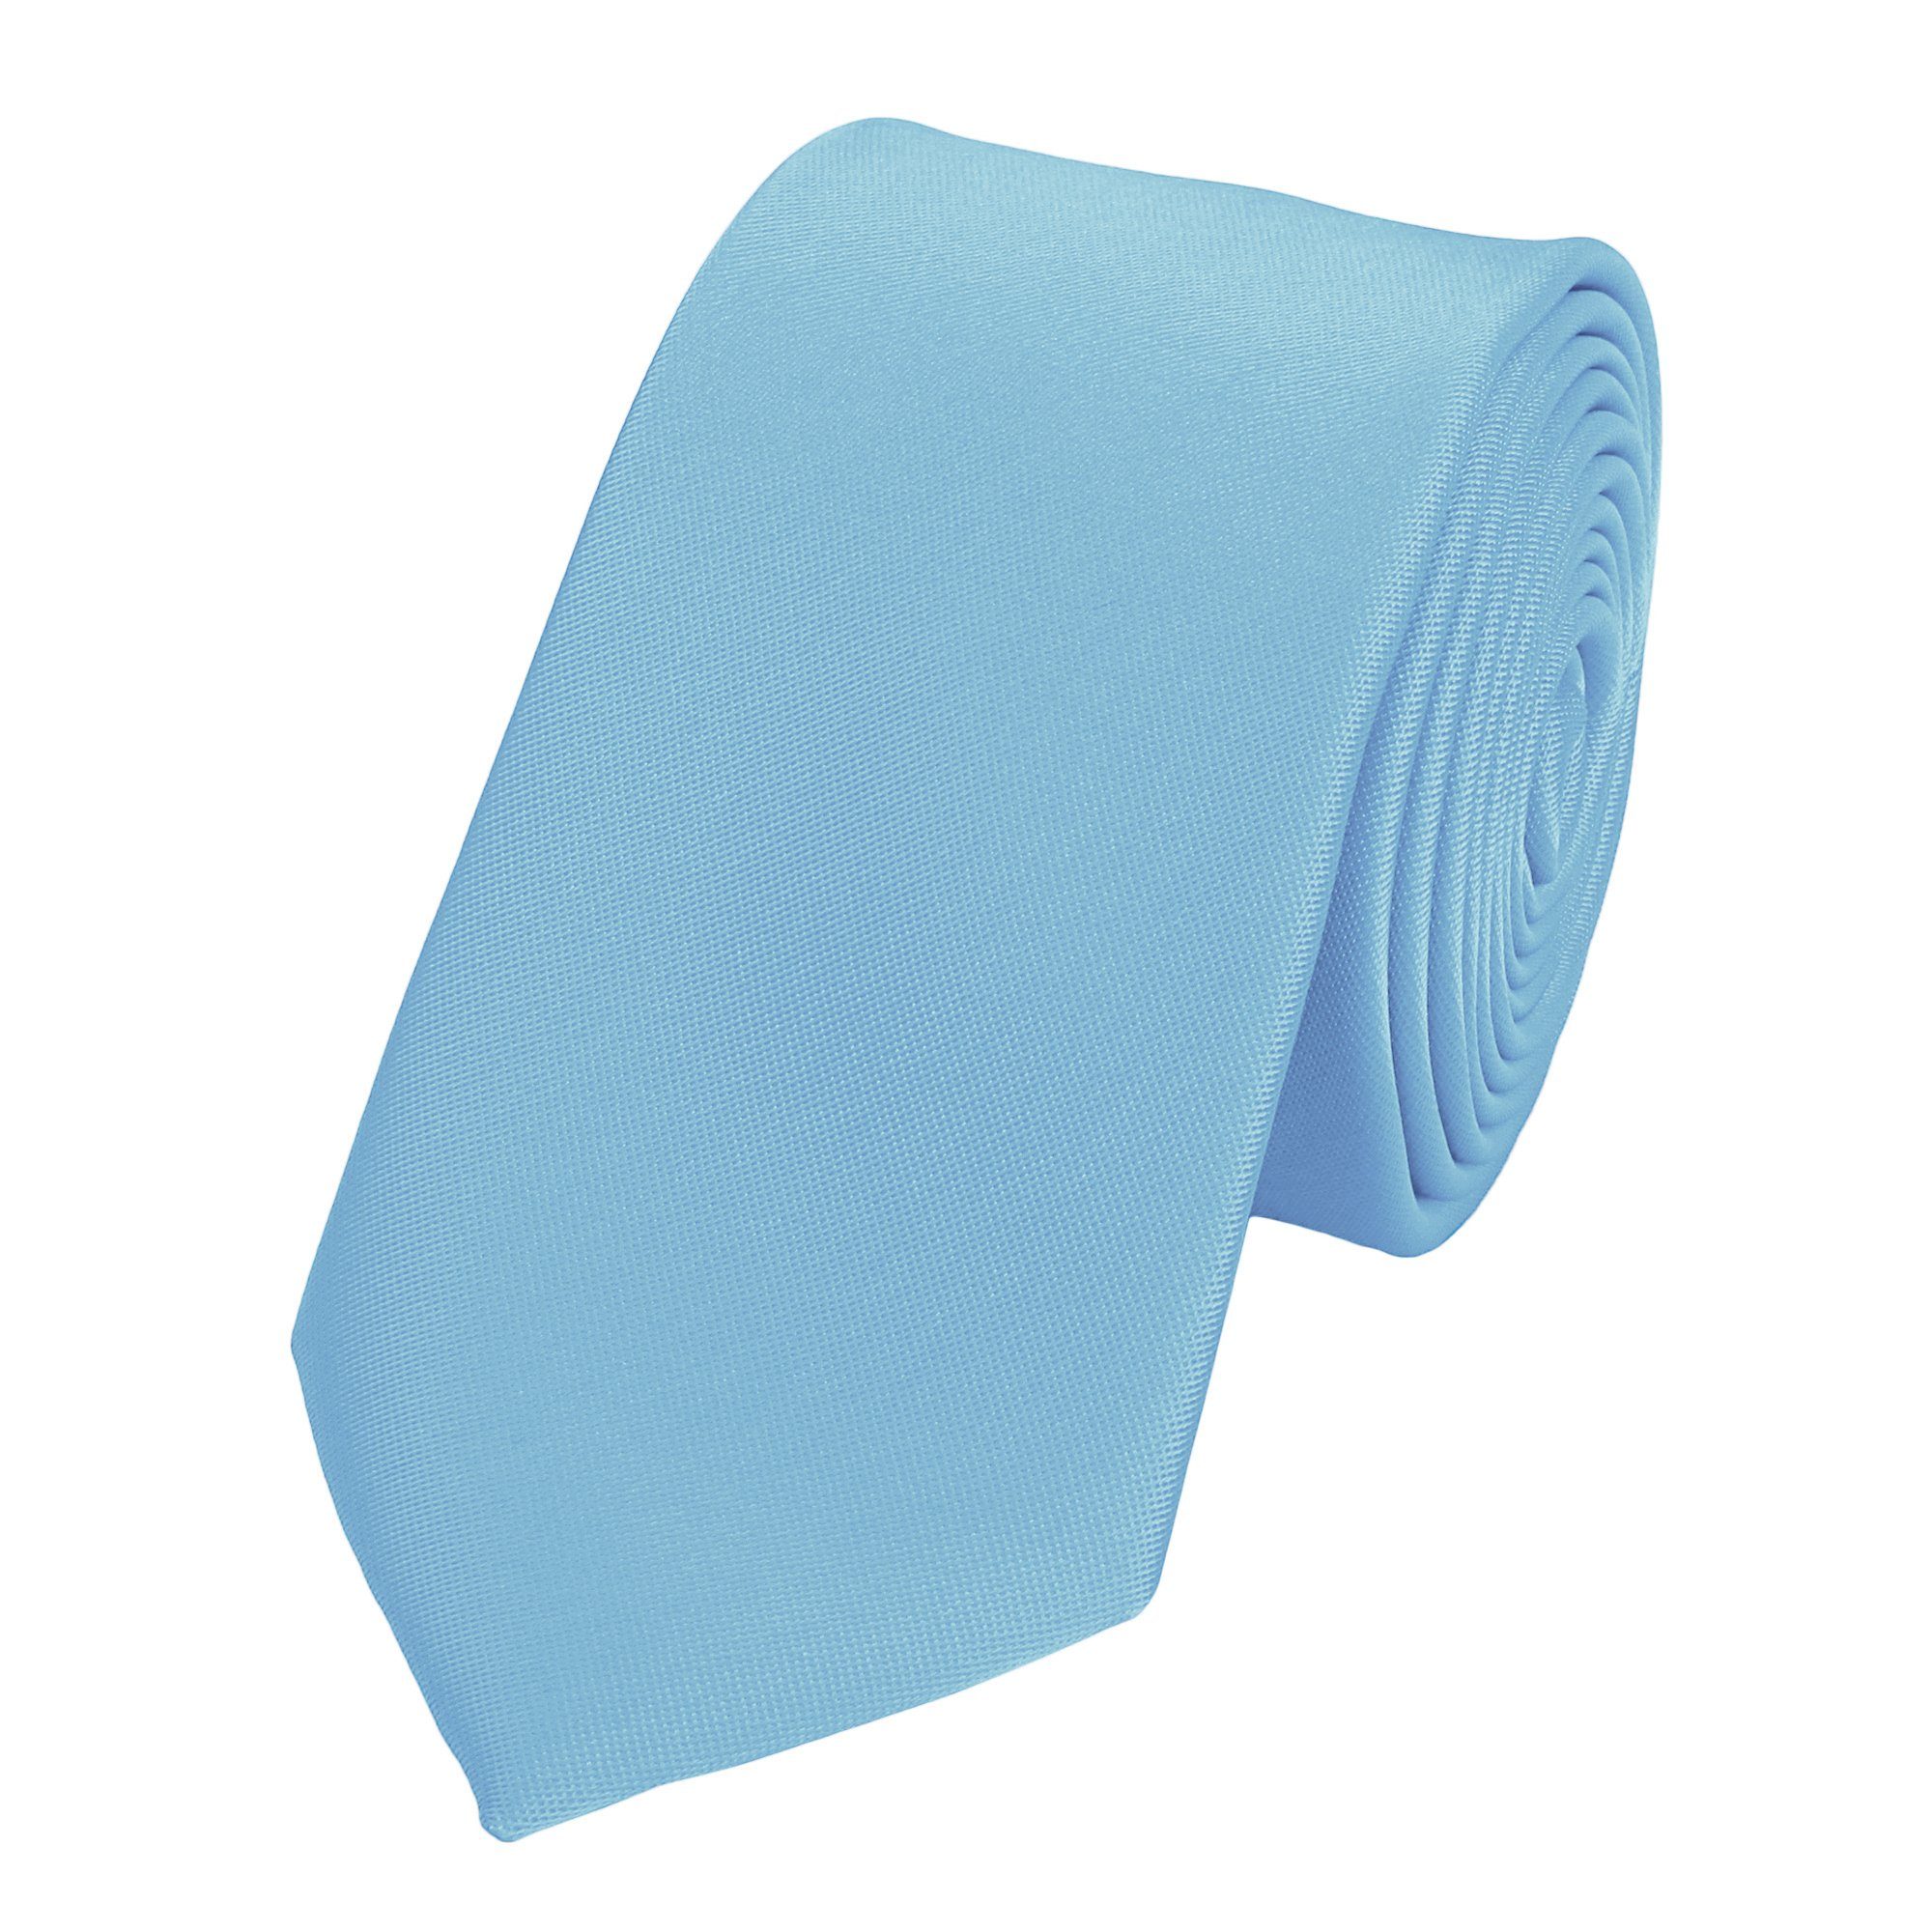 Breite (ohne Einfarbige Krawatten (6cm), Fabio Schlips Farini in Hellblau Herren - Krawatte Unifarben) Schmal Unicolor Box, 6cm